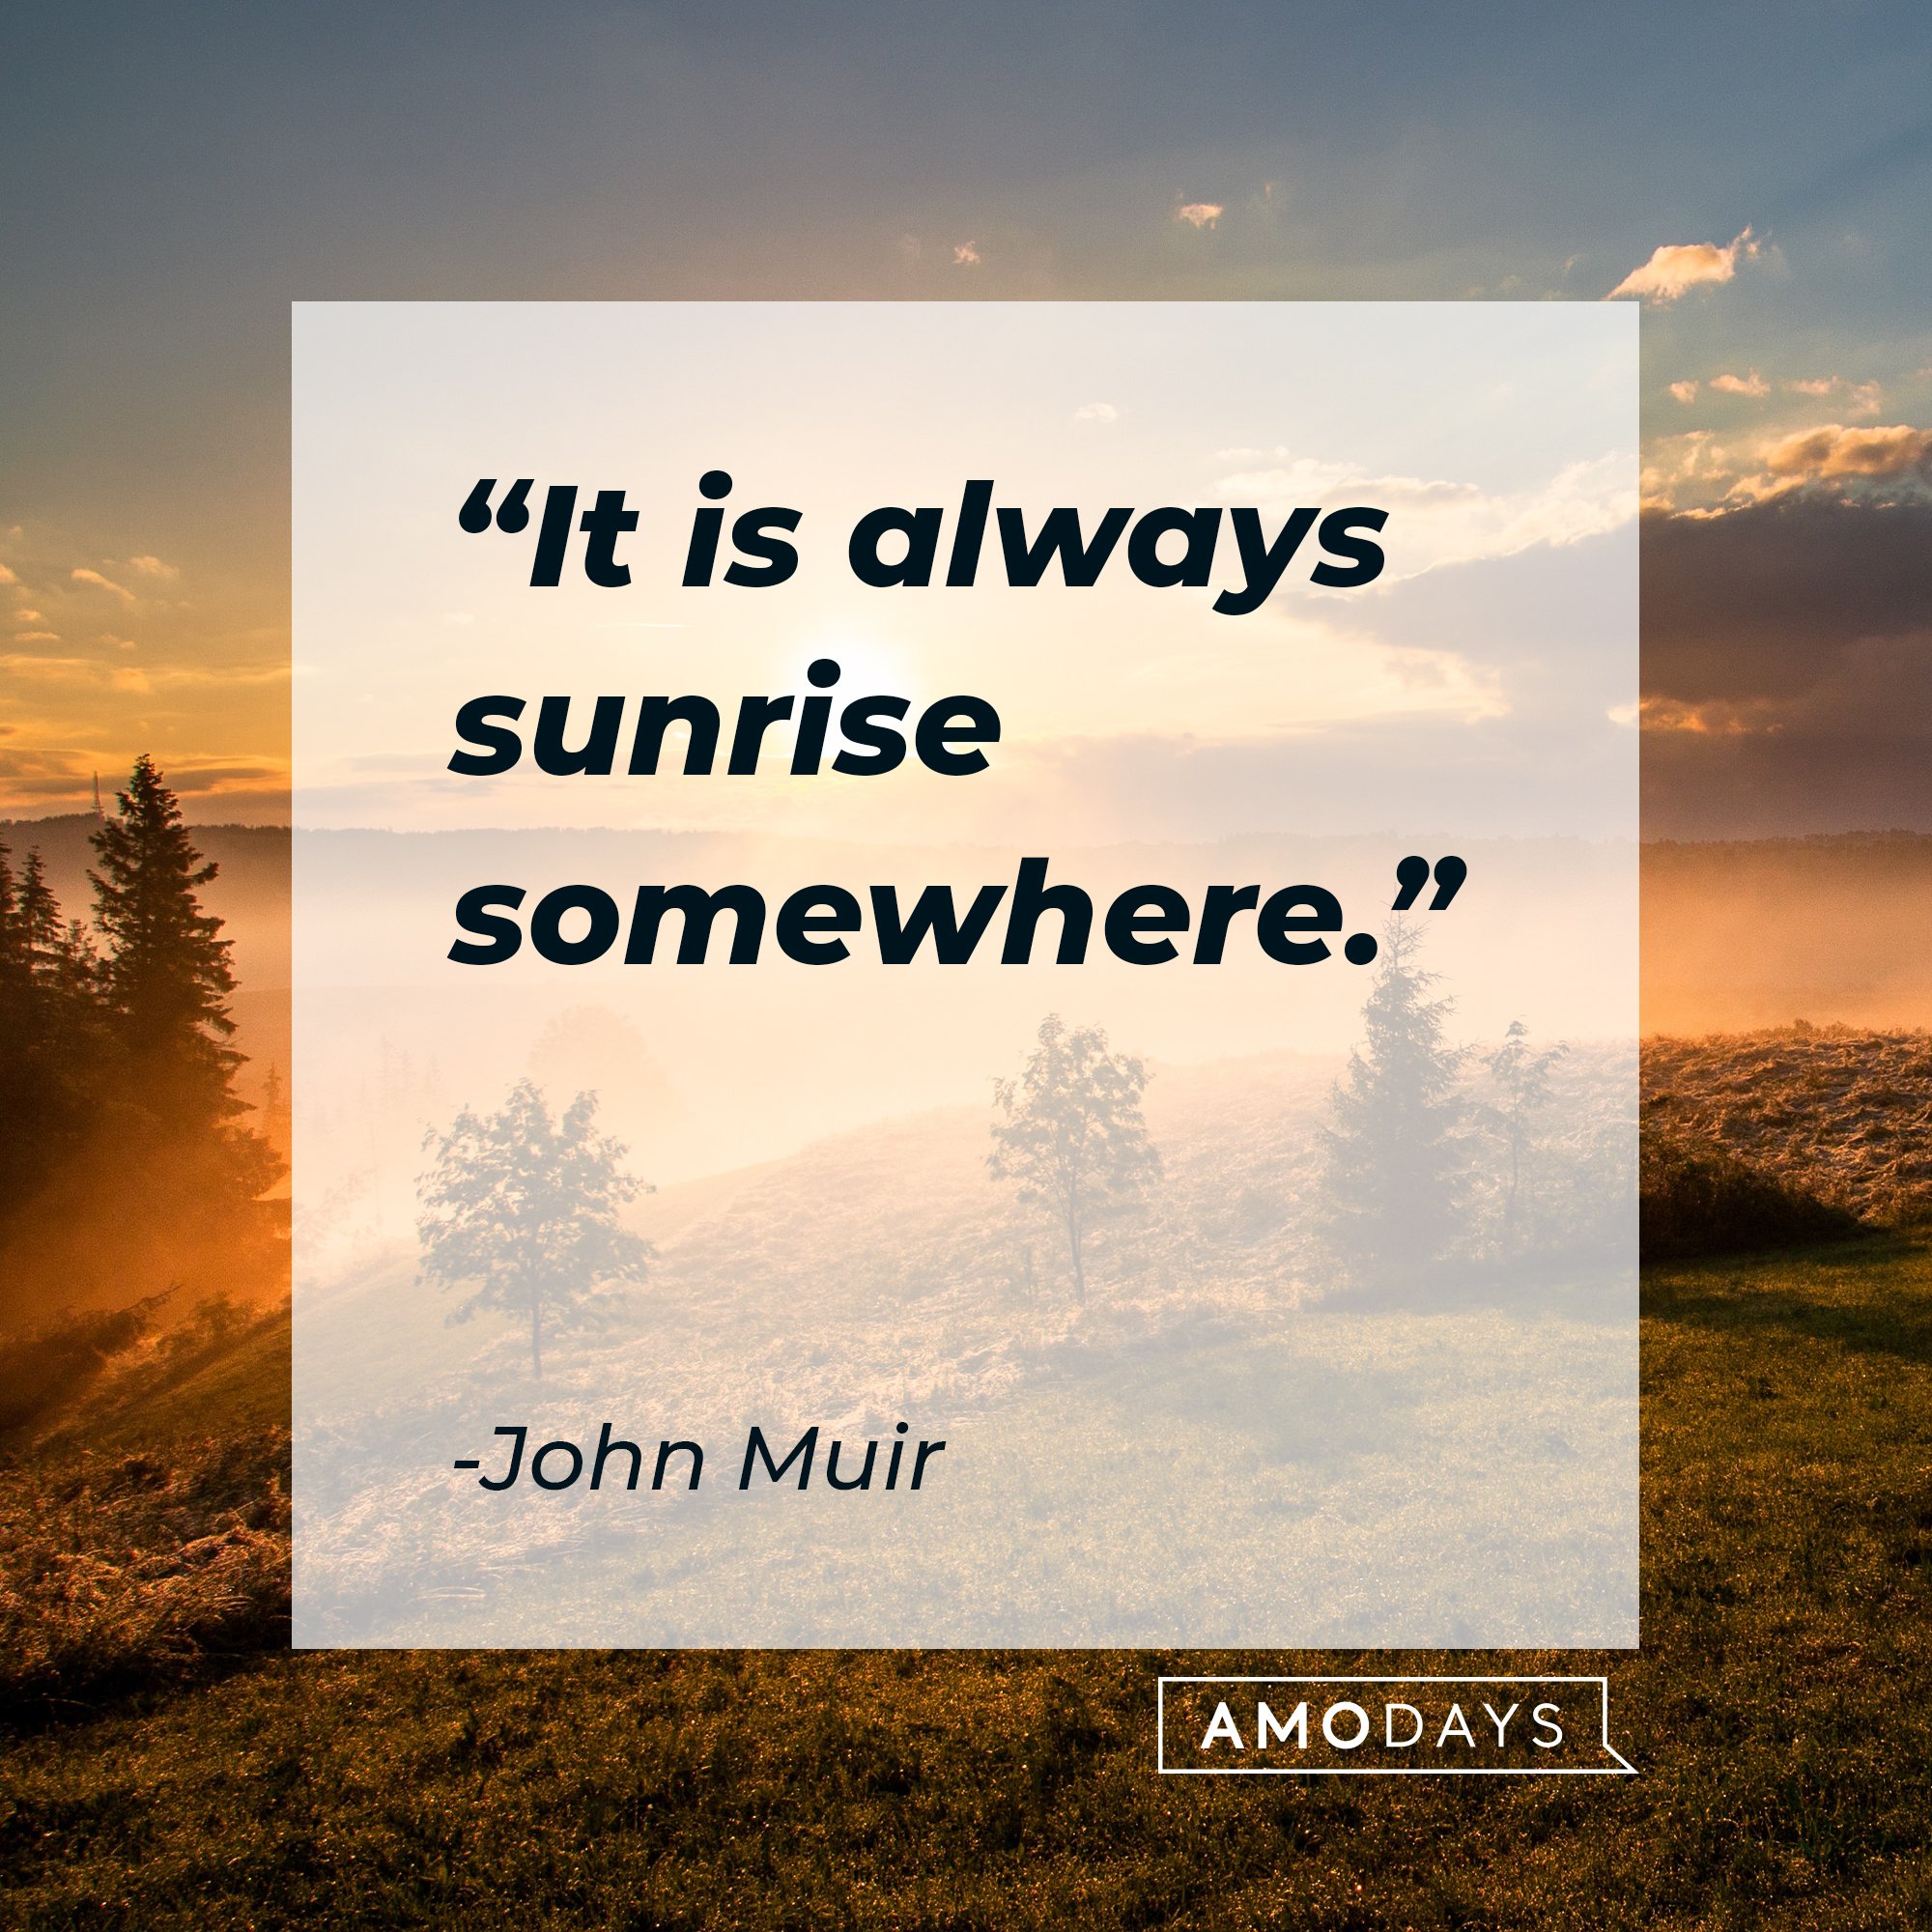 John Muir’s quote: "It is always sunrise somewhere." | Image: AmoDays 